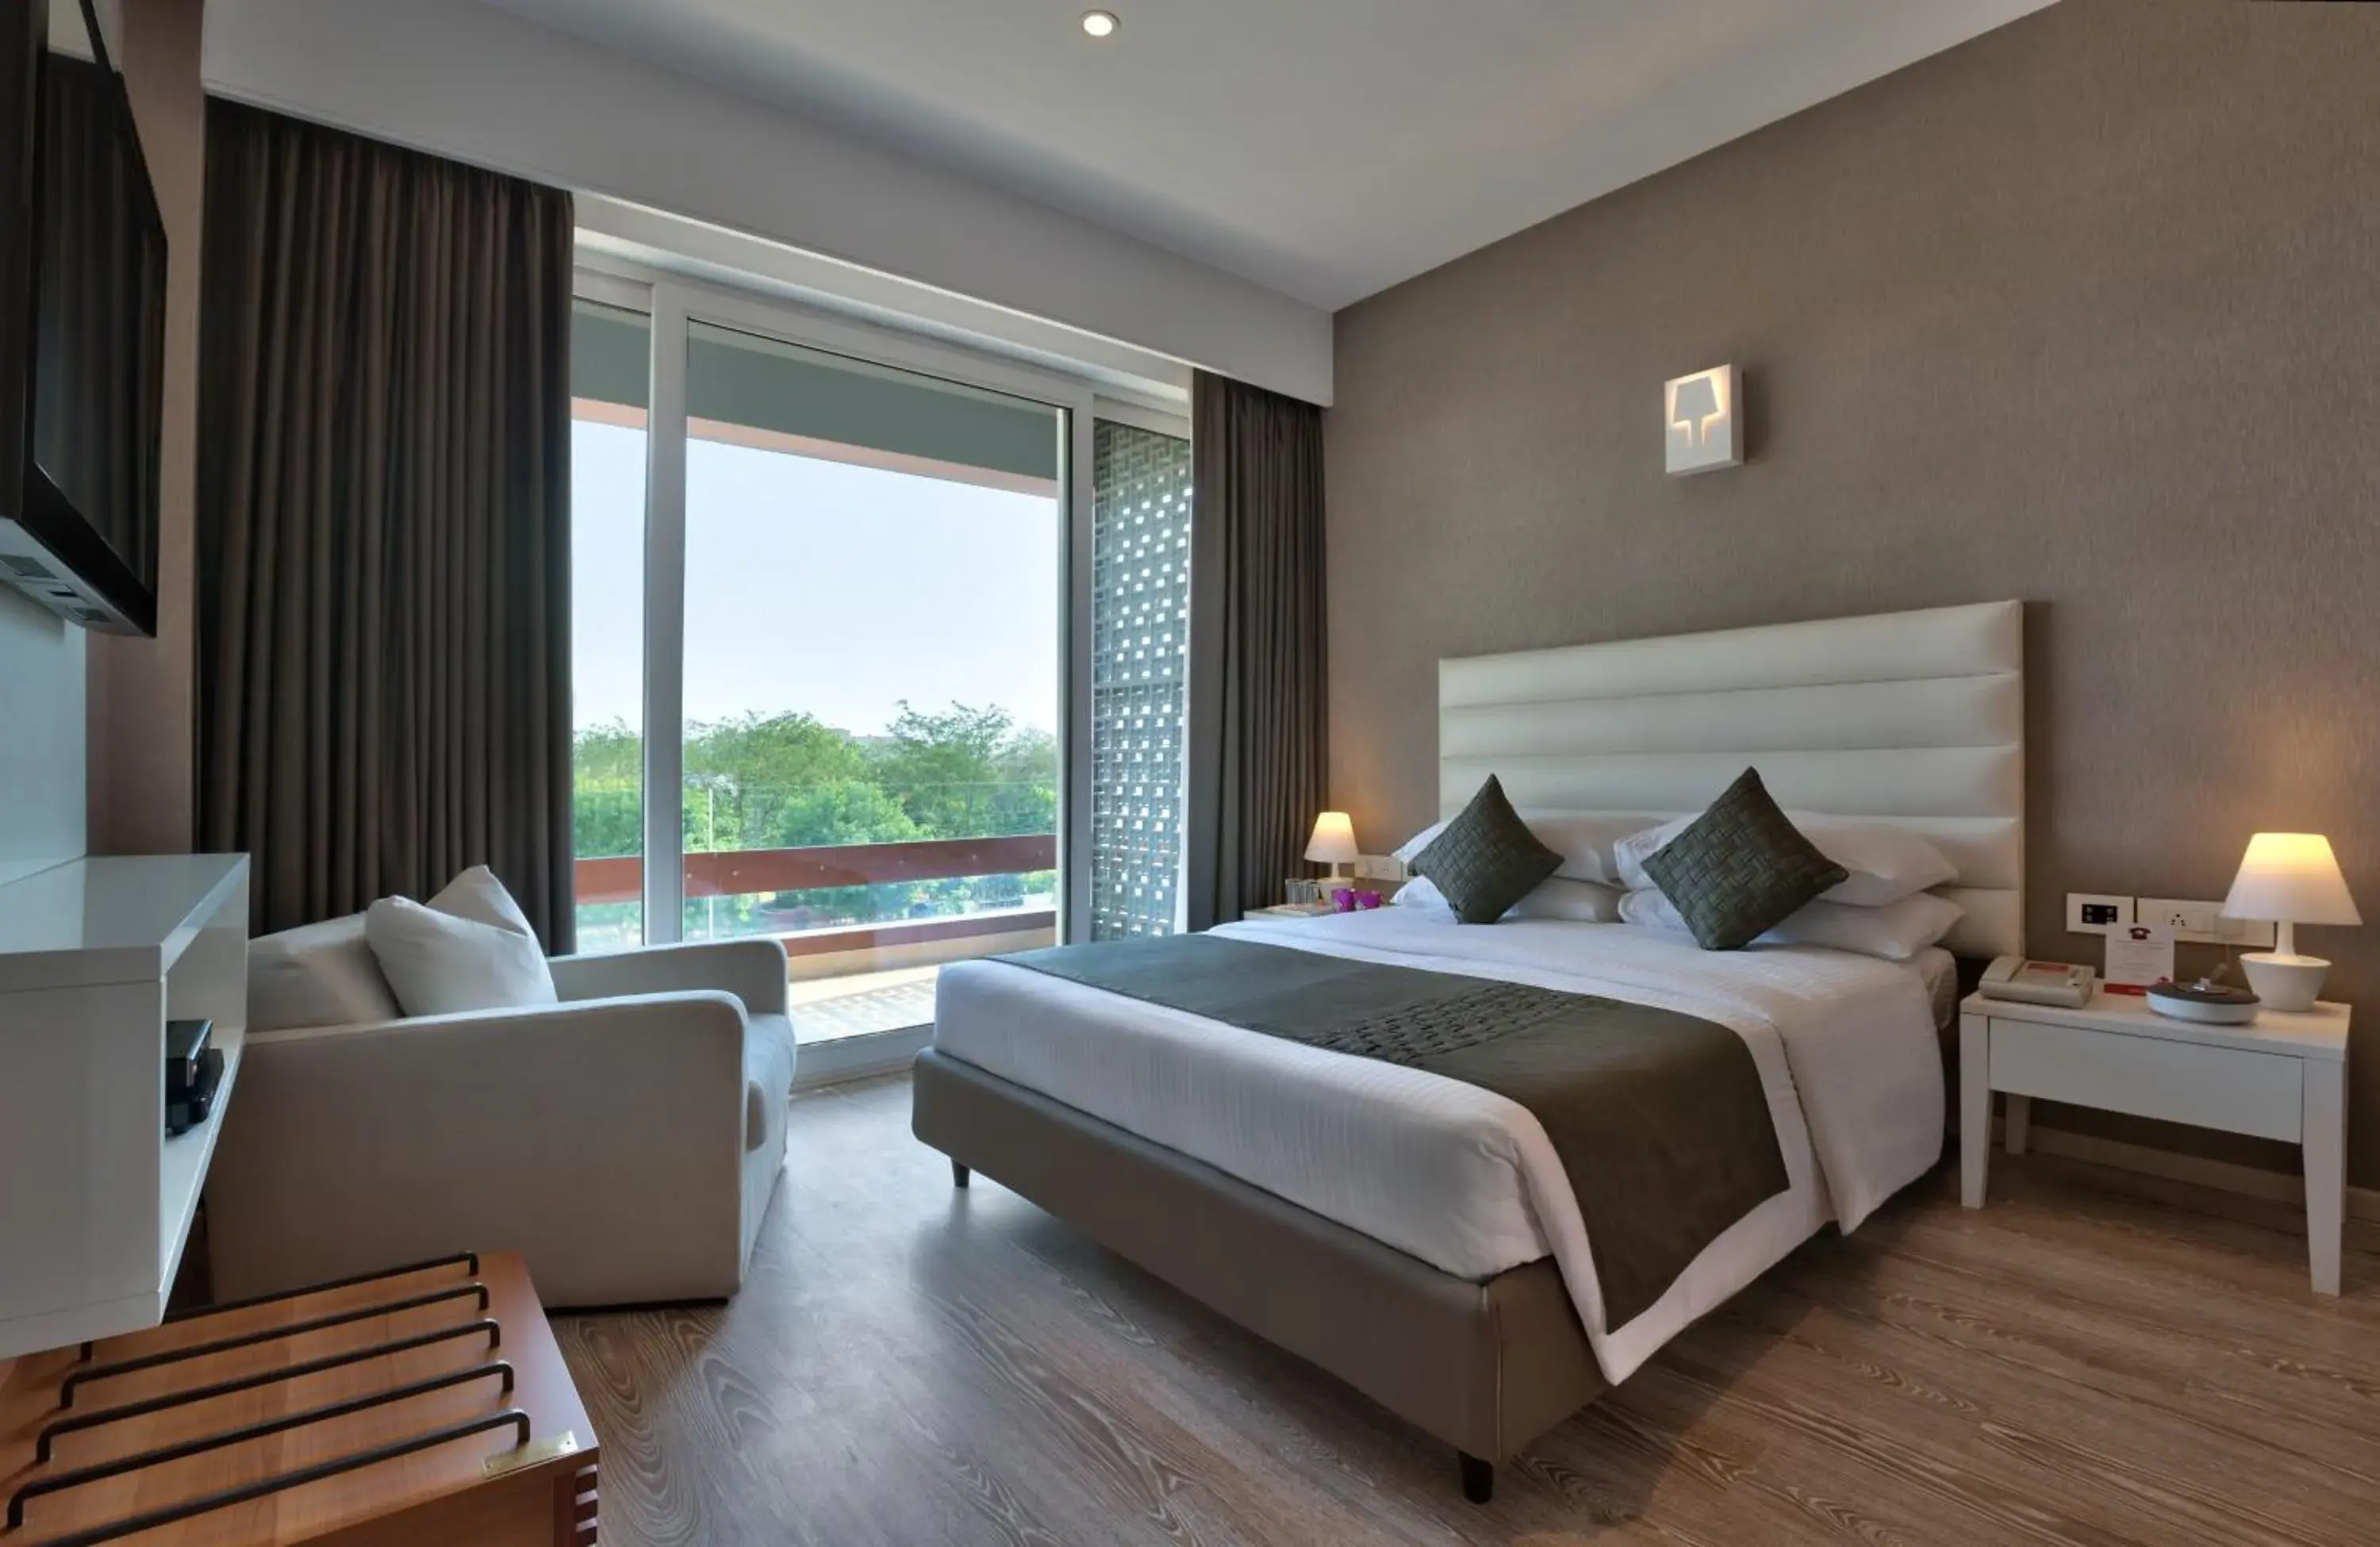 Bedroom, Room Photo in The Atara Hotel